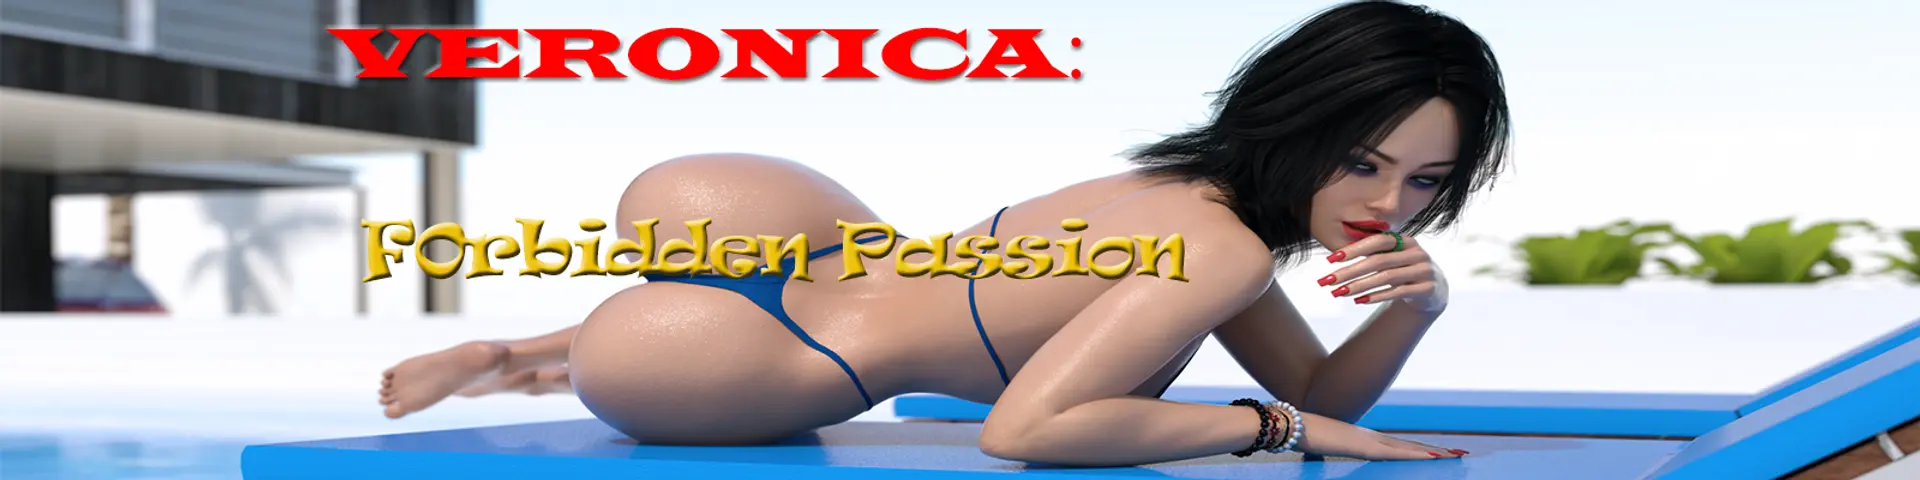 Veronica: Forbidden Passion [v0.1] main image